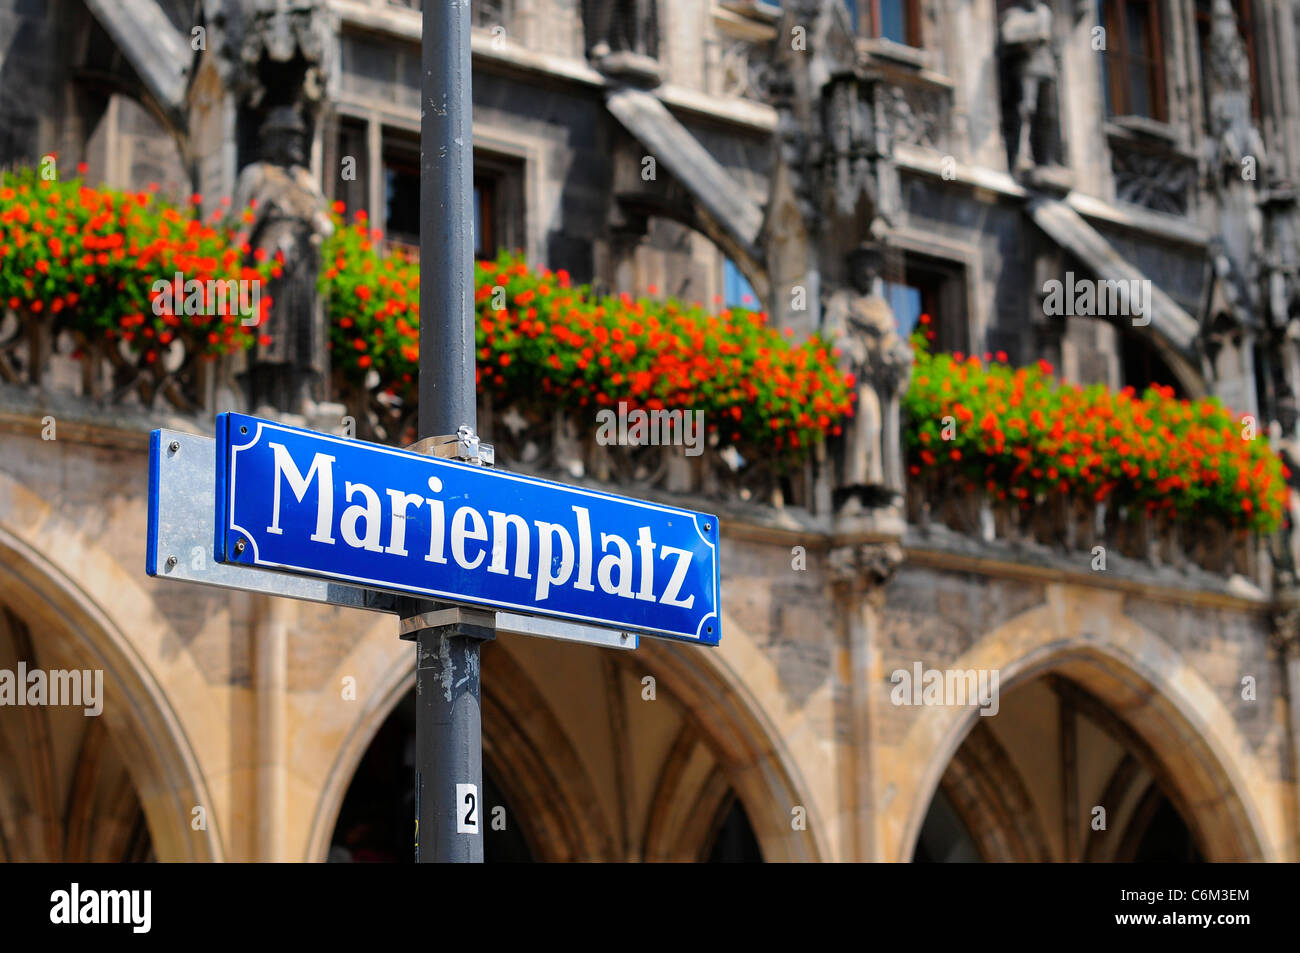 Marienplatz square, Munich, Germany Stock Photo